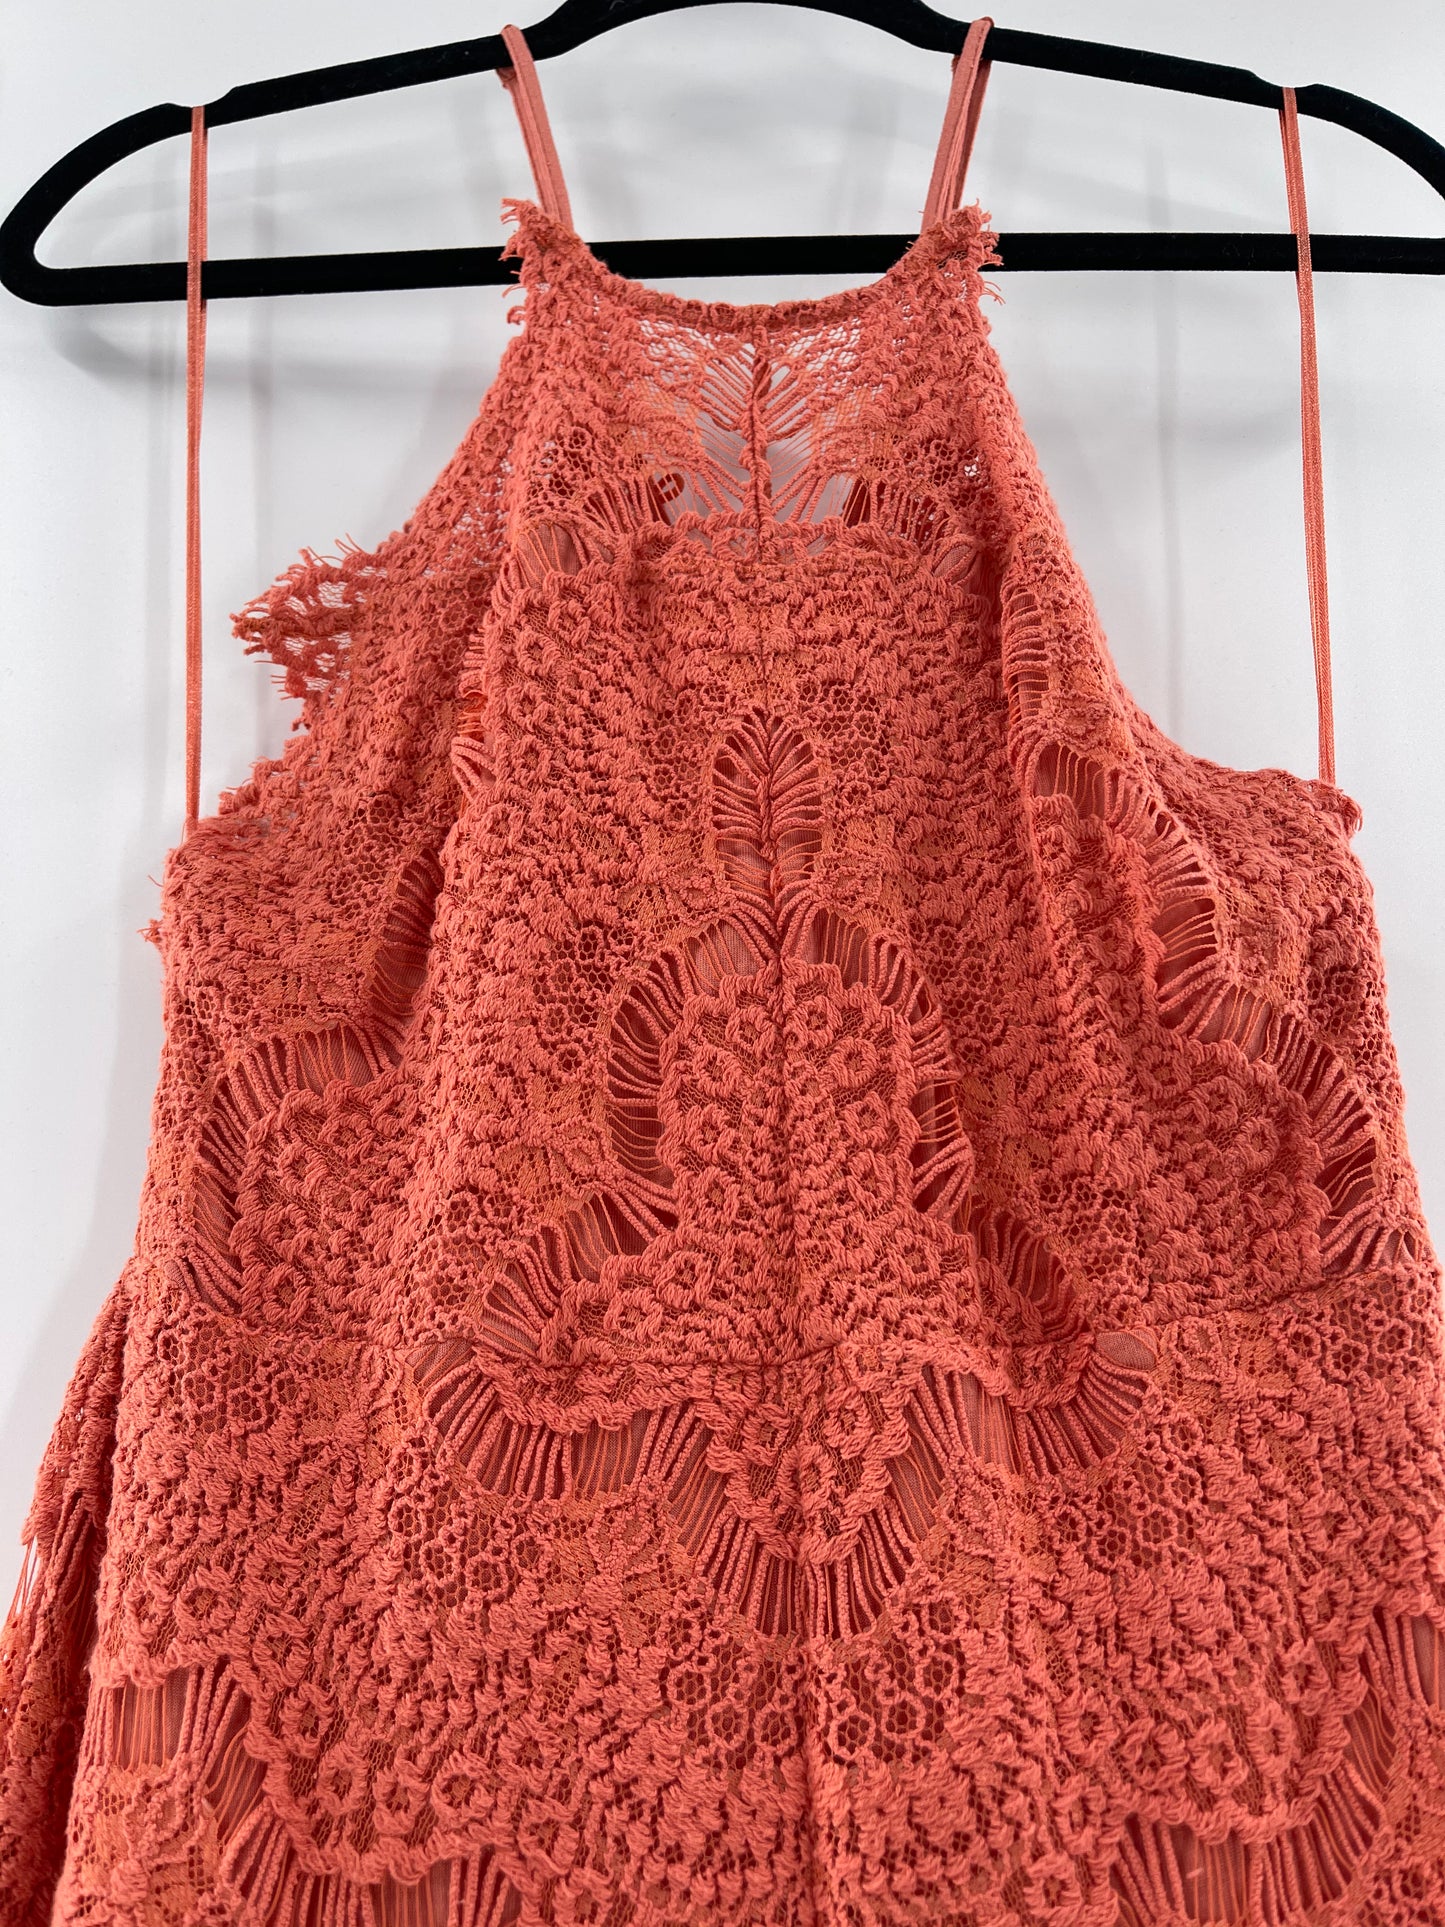 Free People Bodycon Coral Lace Mini Dress (XS)